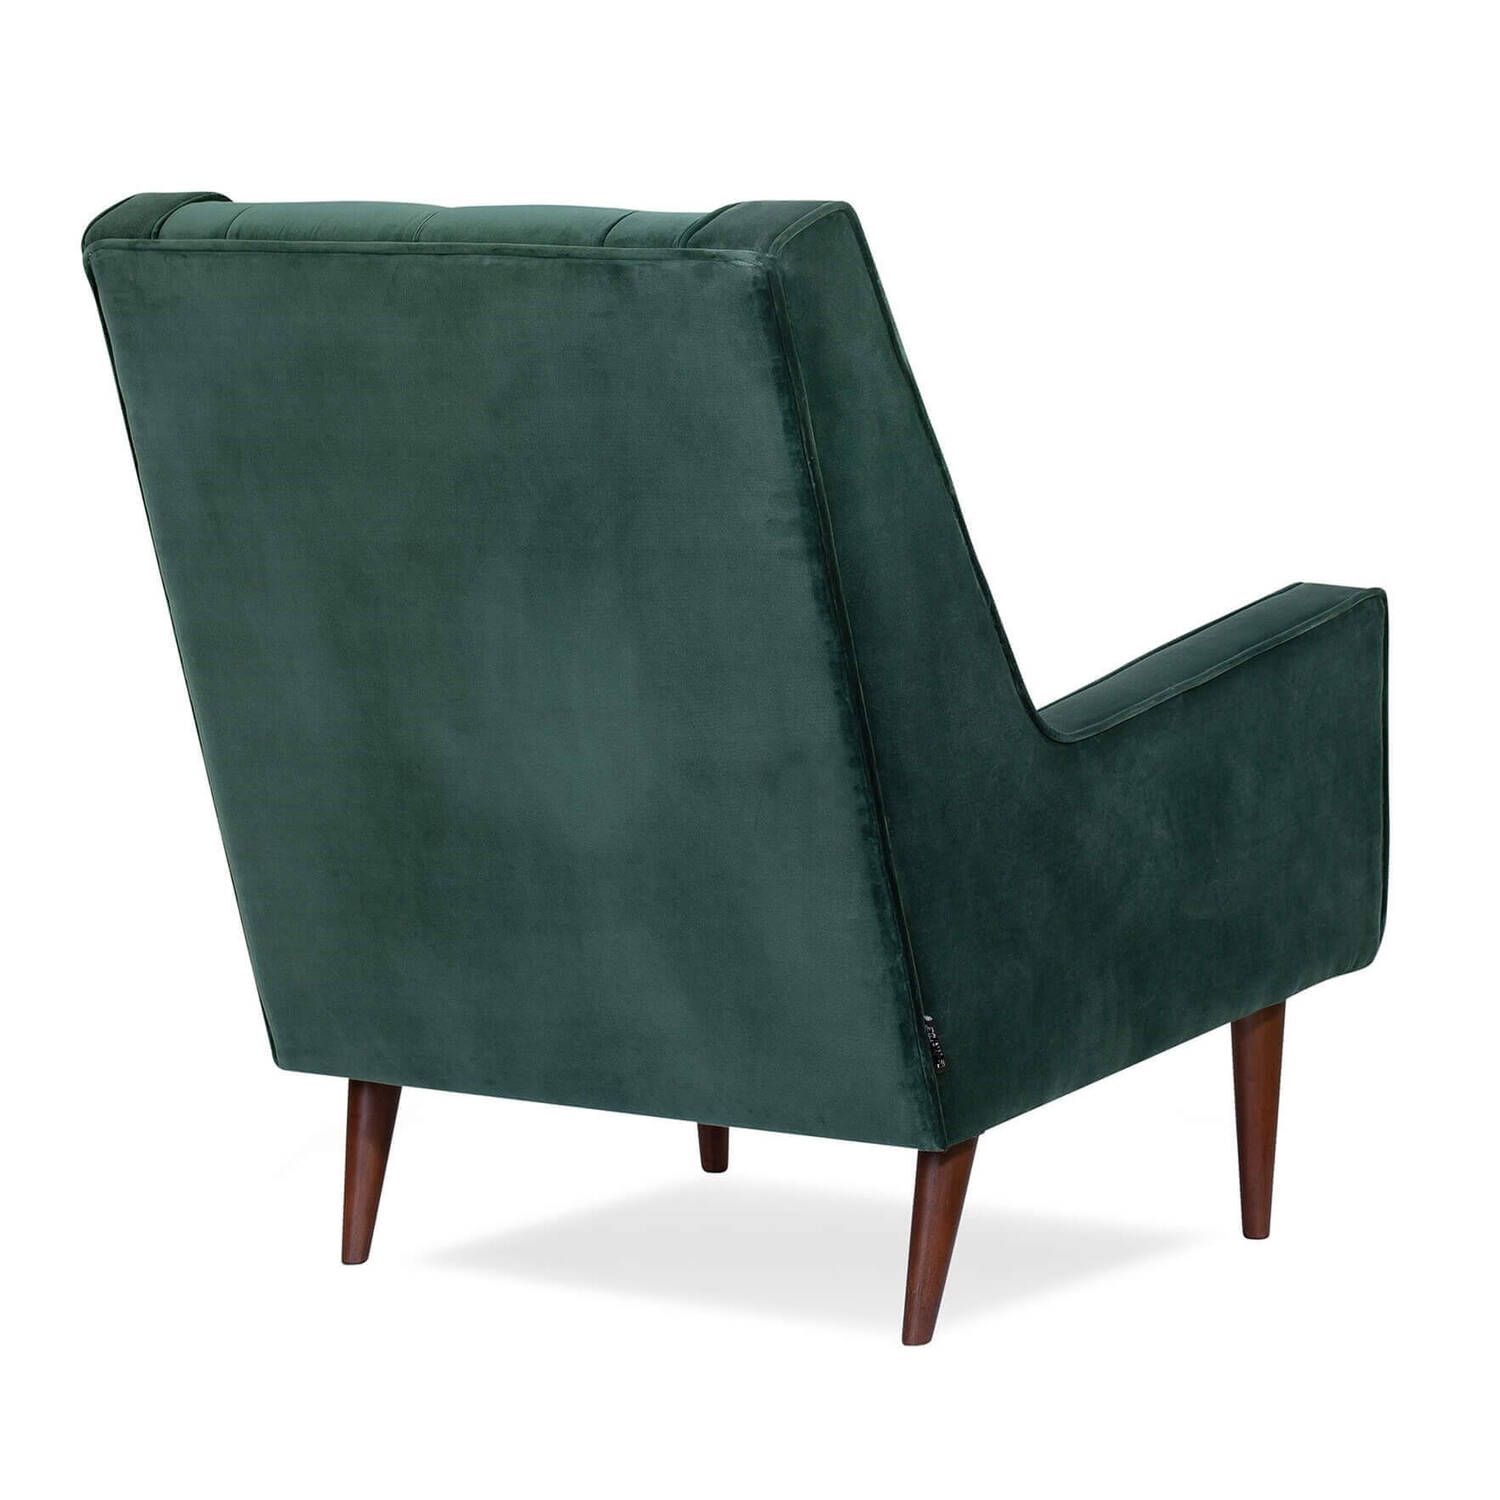 Кресло Krisel, зеленое